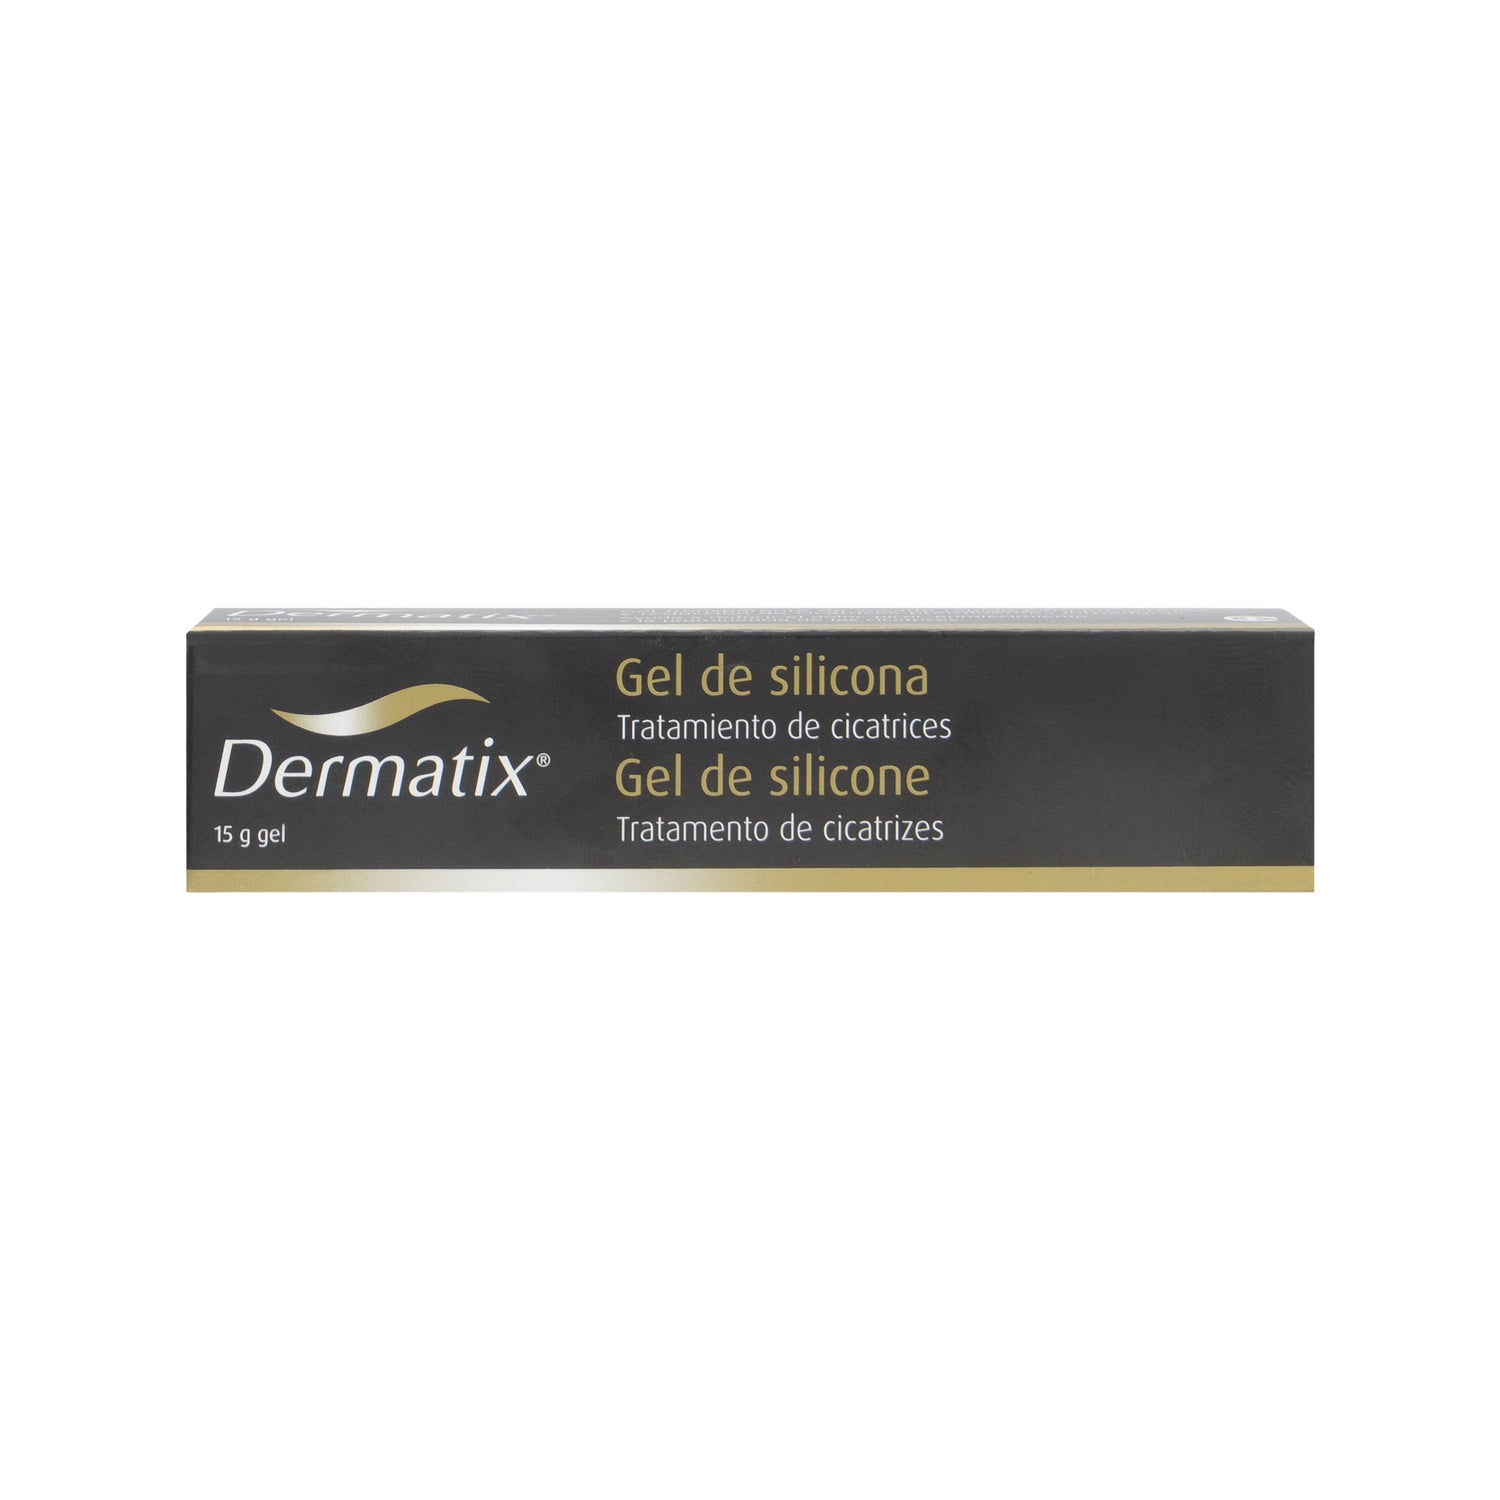 Vet munitie kopiëren Dermatix® silicone gel 15g | PromoFarma